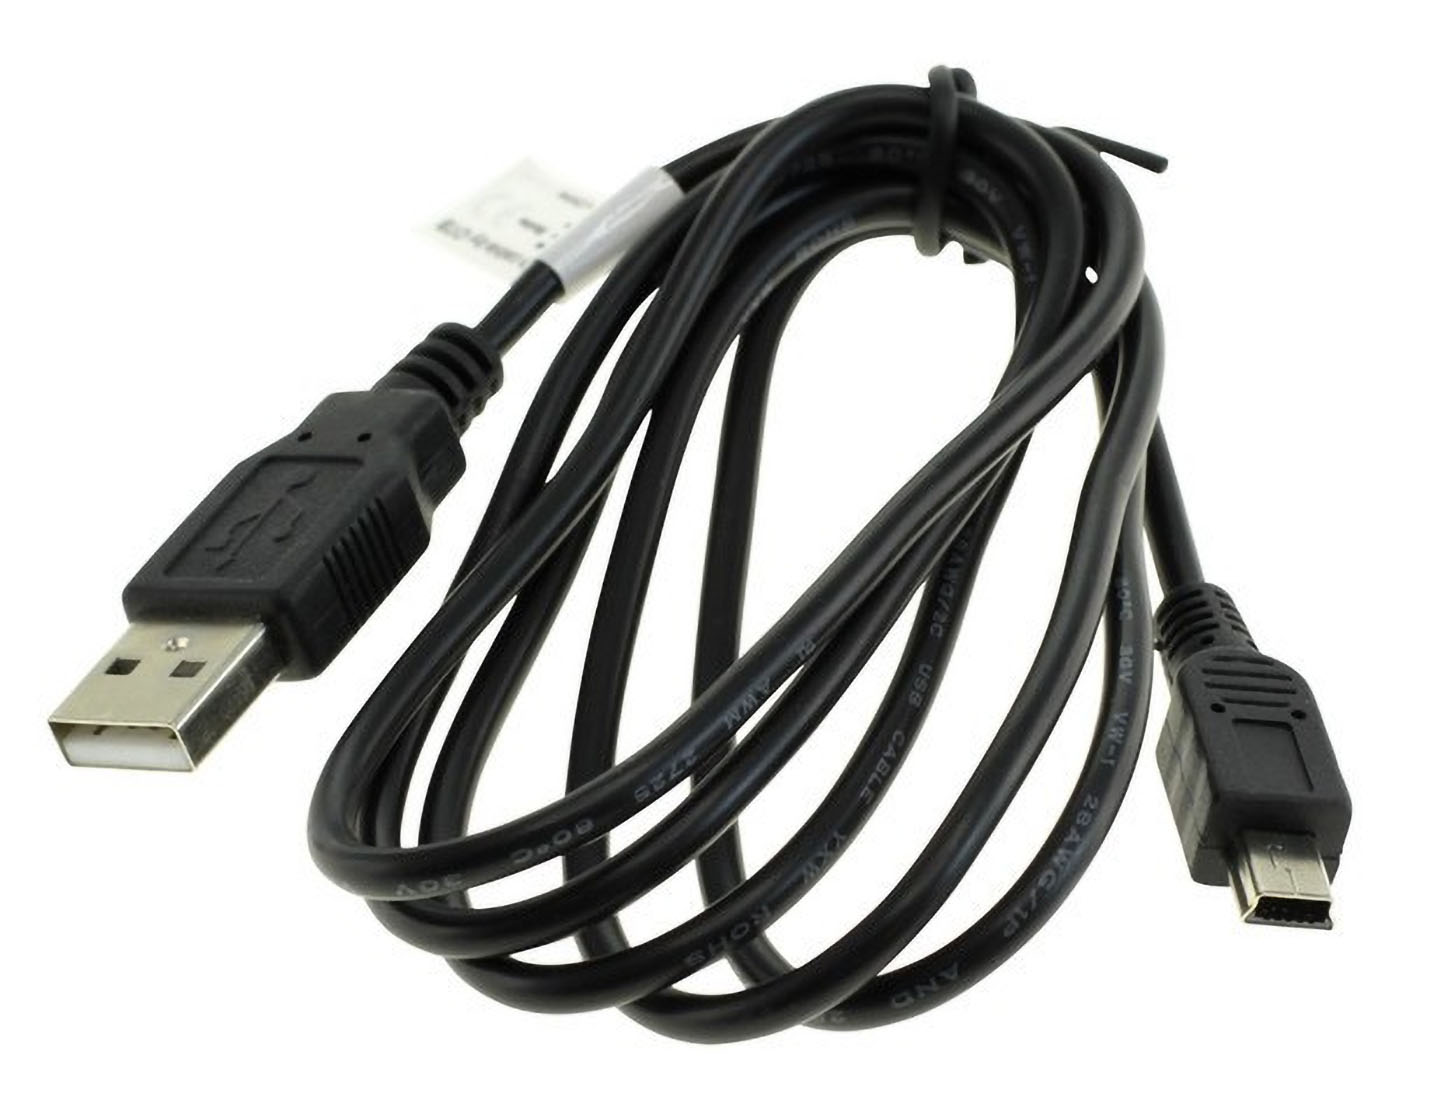 Garmin Kabel sonstige USB-Datenkabel schwarz mit MOBILOTEC kompatibel 2699 Garmin, nüvi